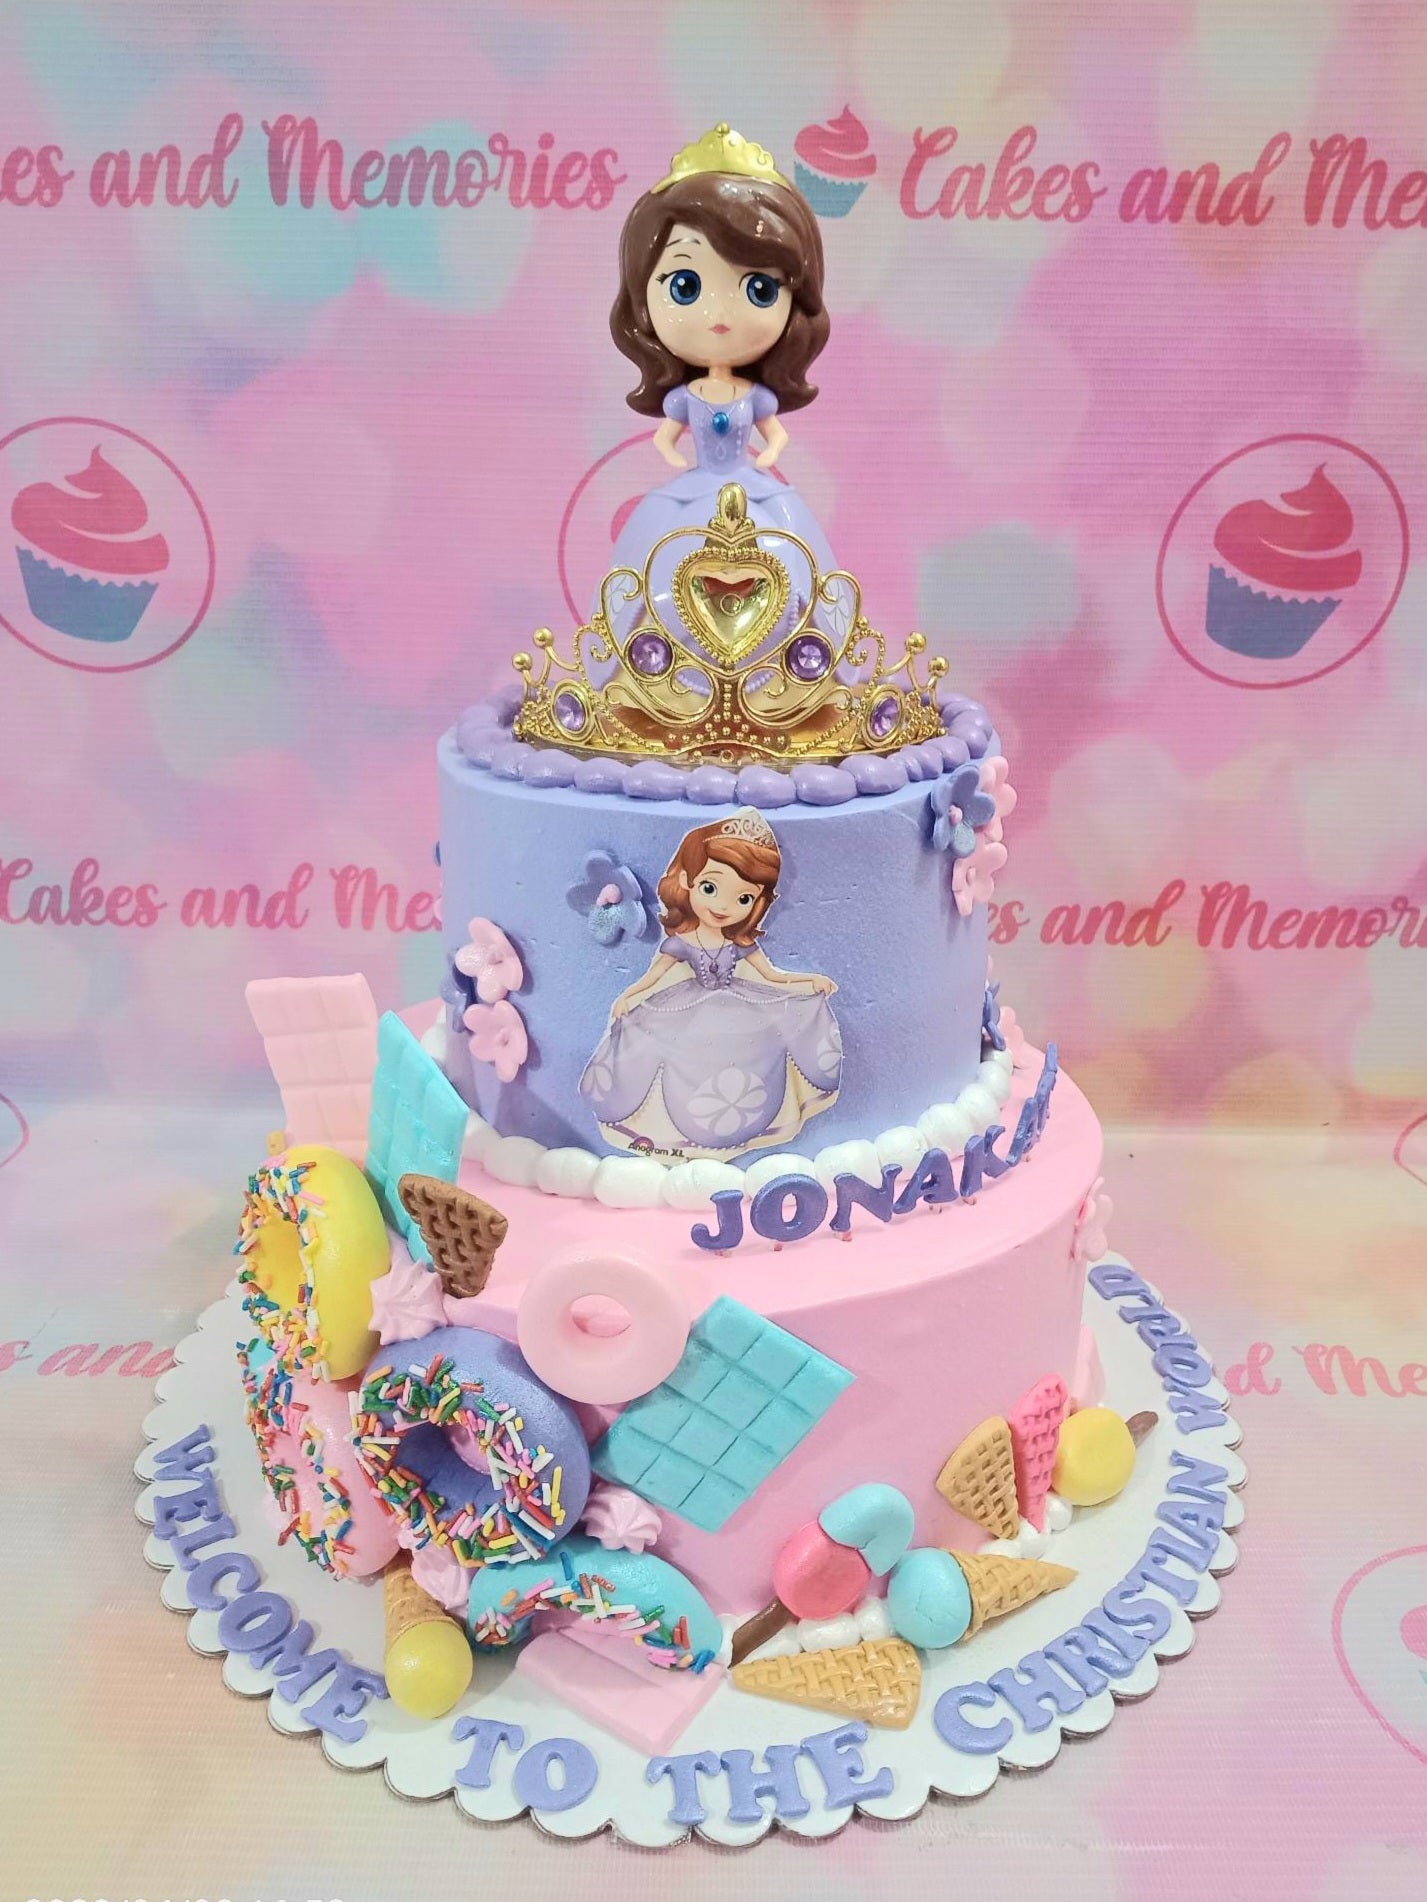 Top 10 Cakes for Birthday Celebration